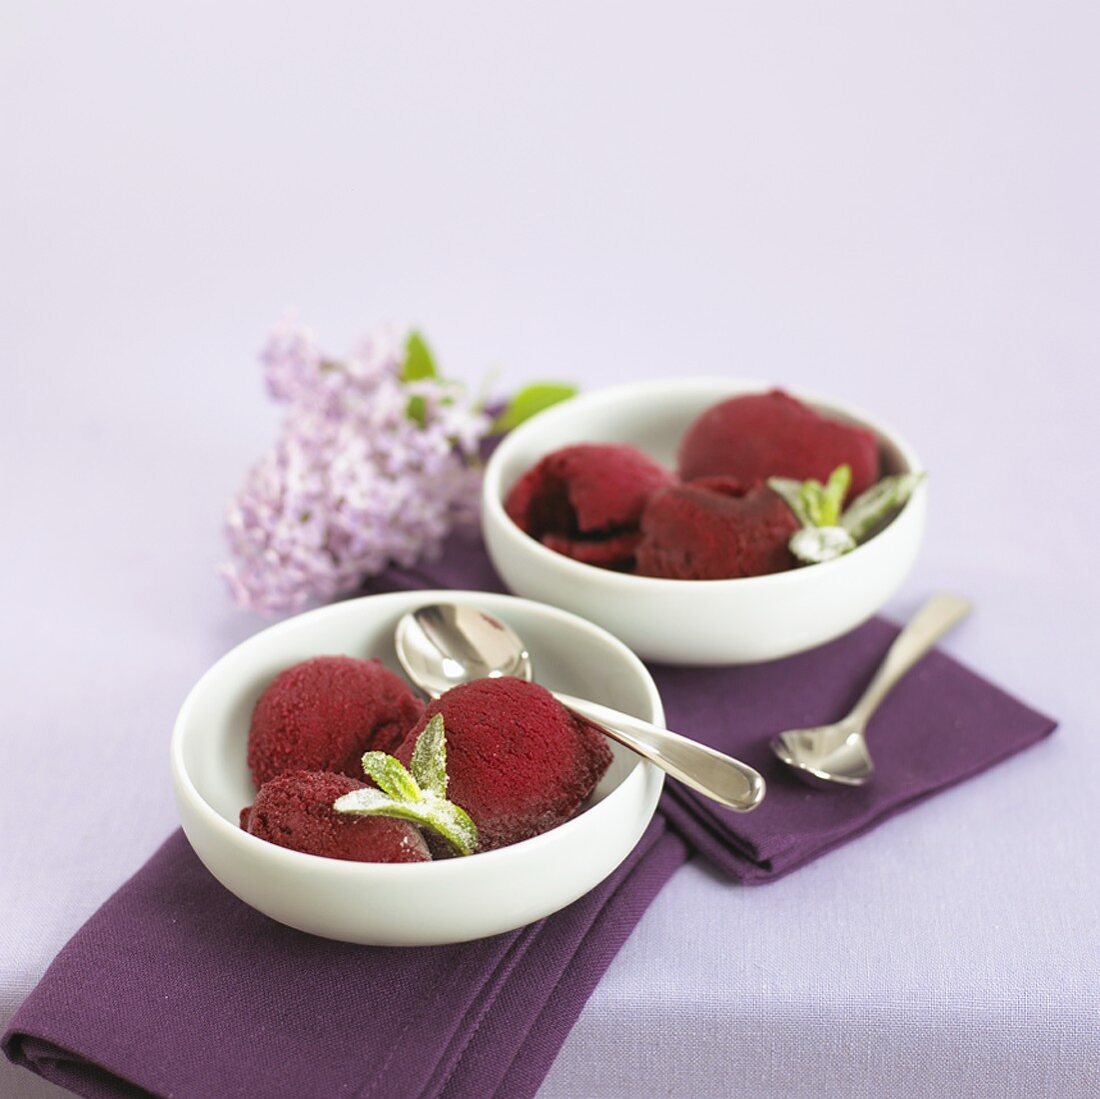 Redcurrant sorbet in dessert bowls